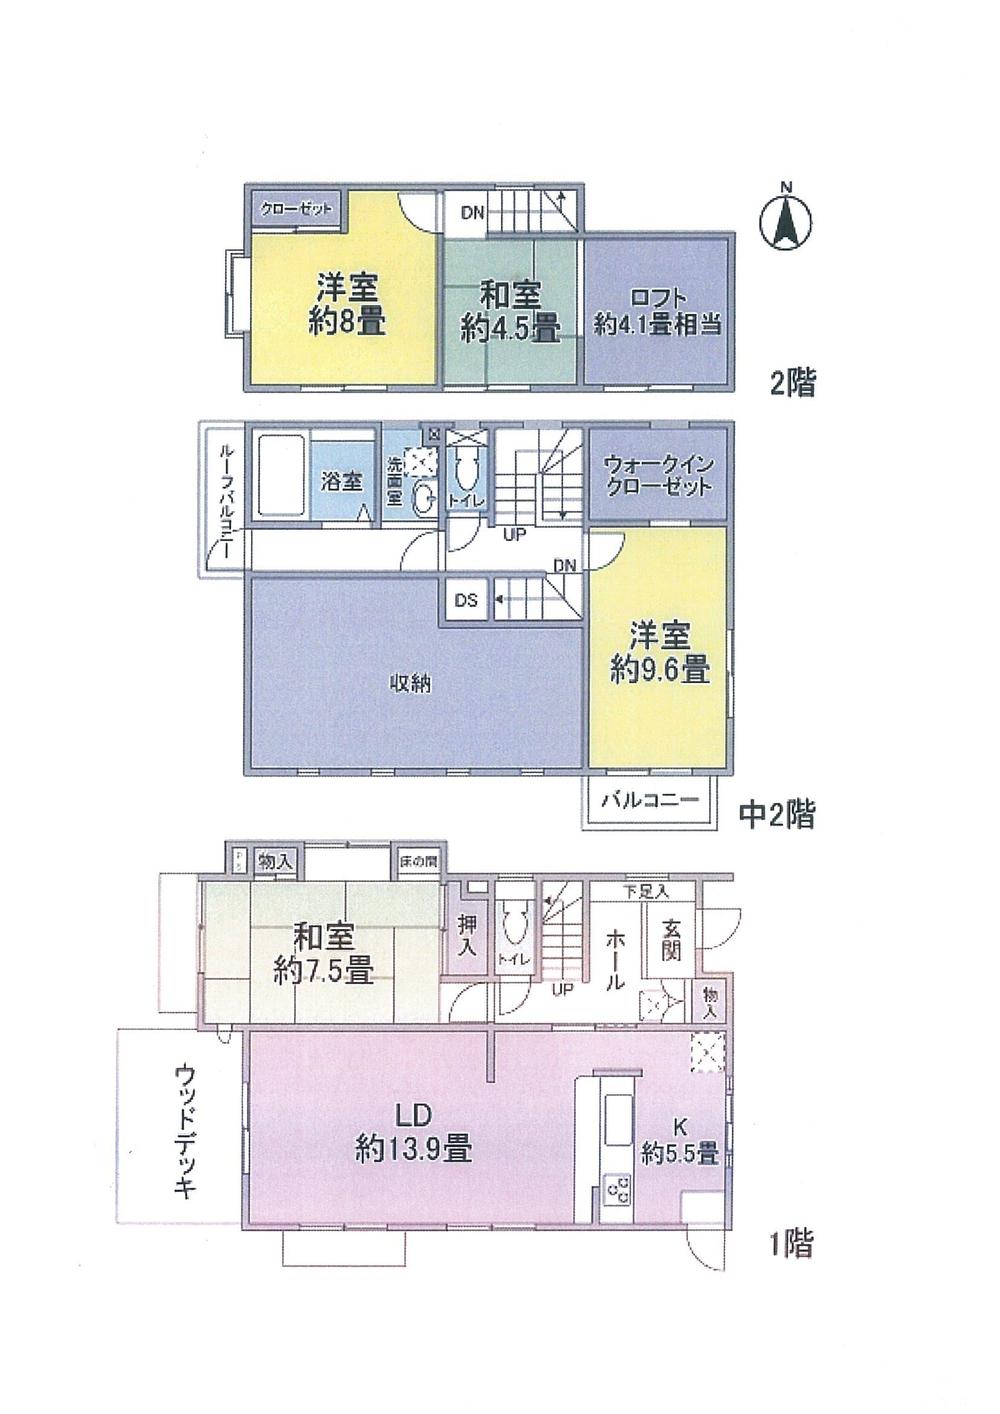 Floor plan. 54,900,000 yen, 4LDK + S (storeroom), Land area 198.35 sq m , "House a warehouse" 4LDK + warehouse storage of building area 116.34 sq m Misawa Homes